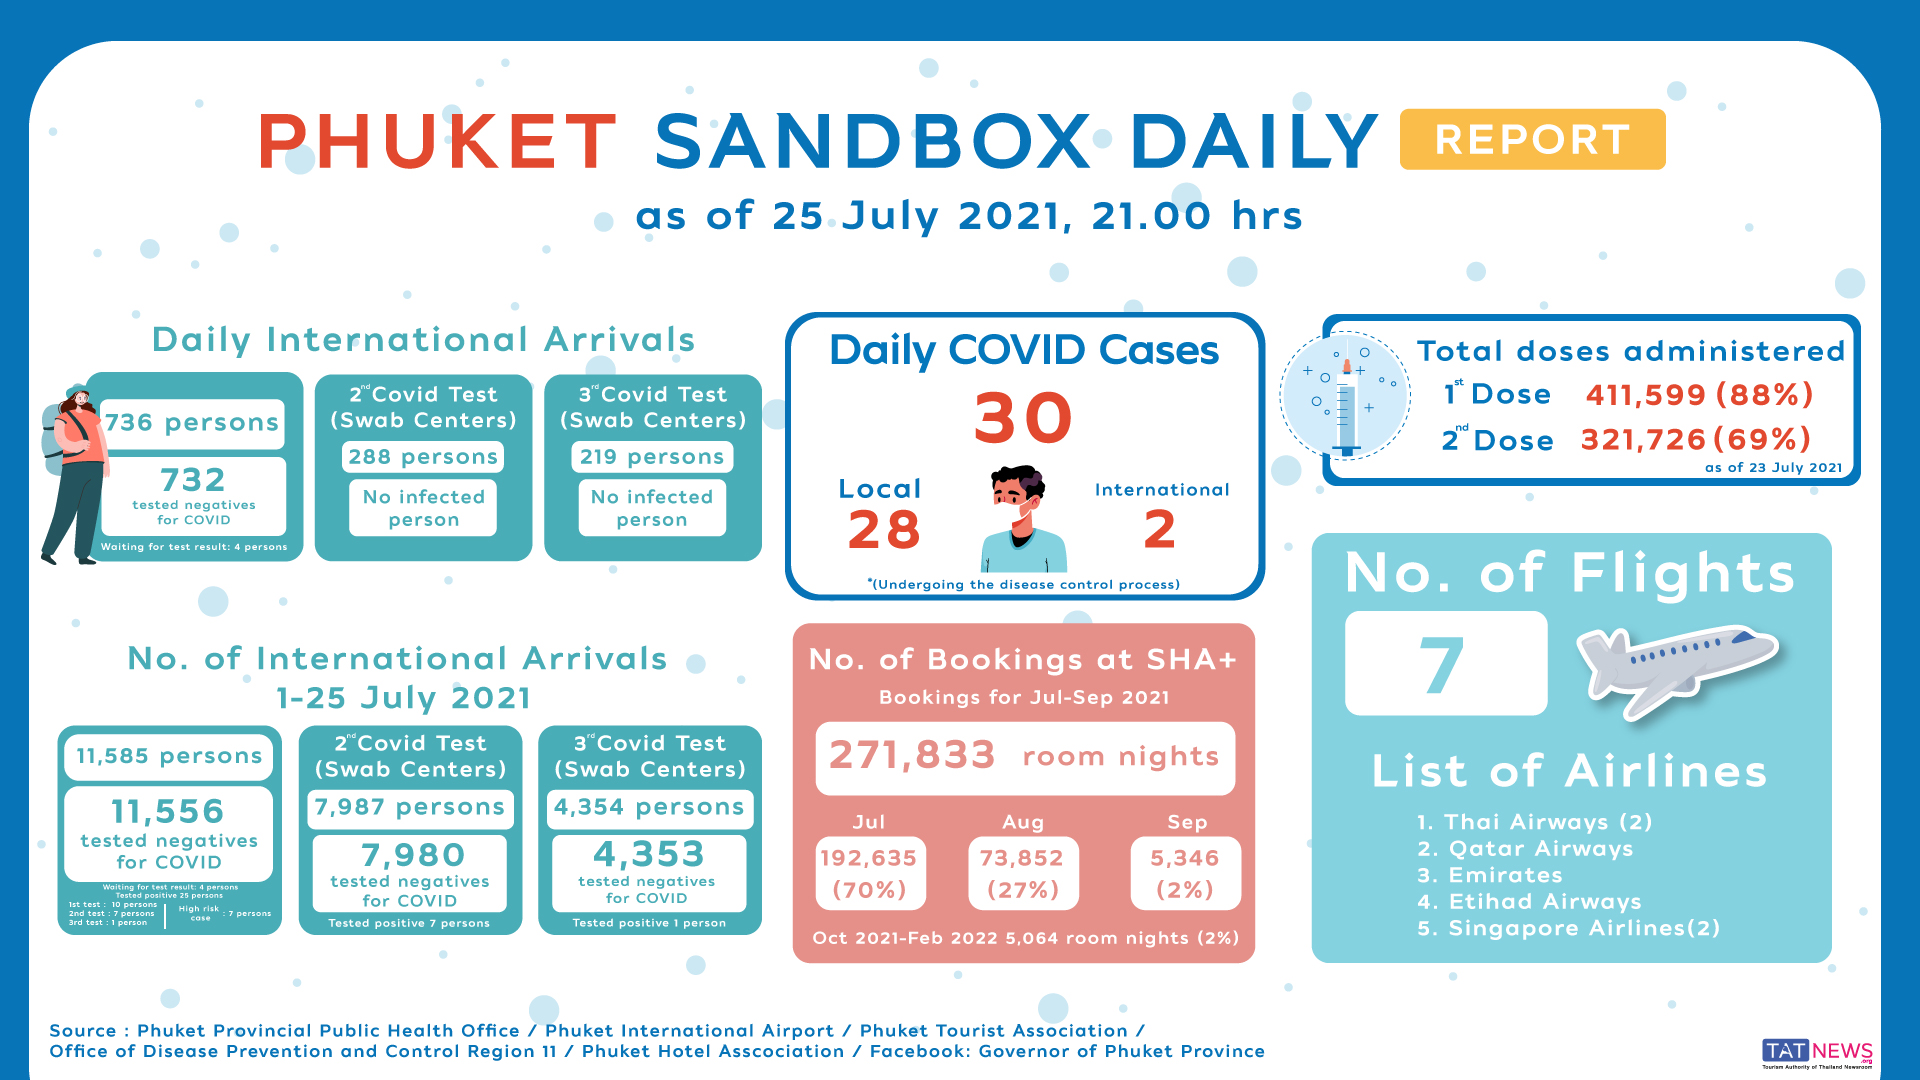 Phuket-Sandbox-Daily-Report-as-of-25July2021.jpg